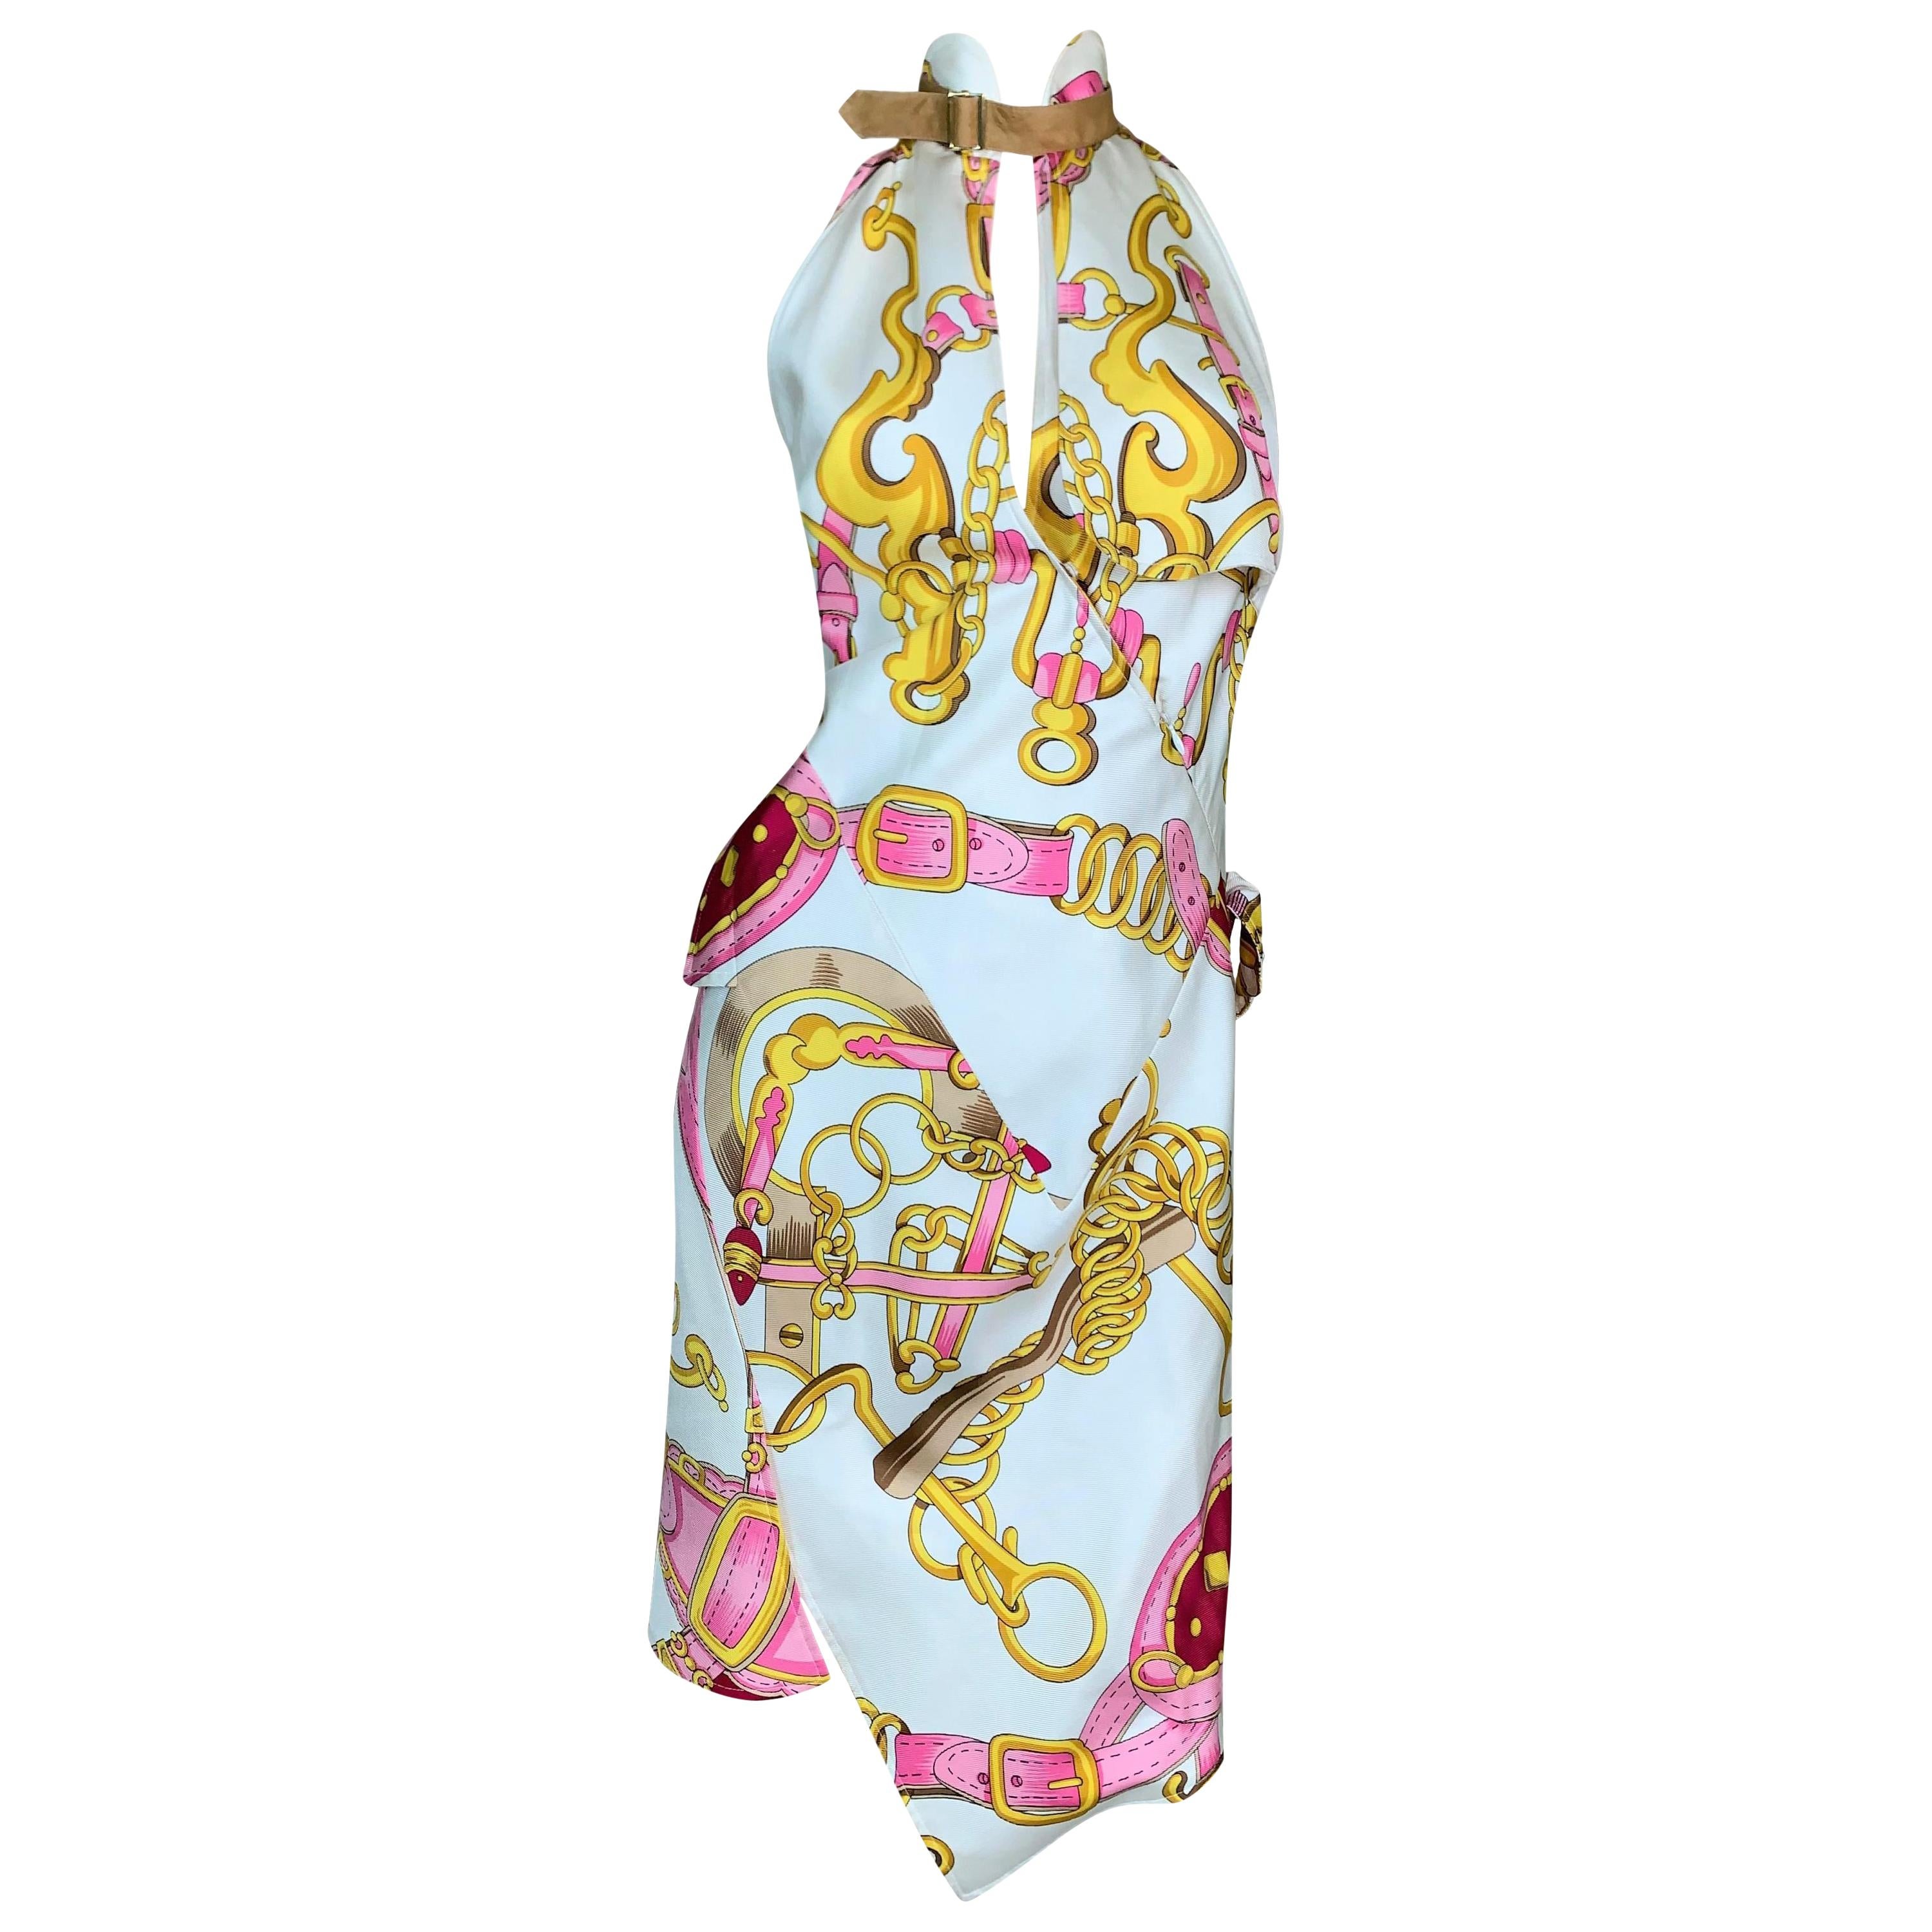 S/S 2000 Christian Dior John Galliano Runway Pink Gold Chain Print Silk Dress